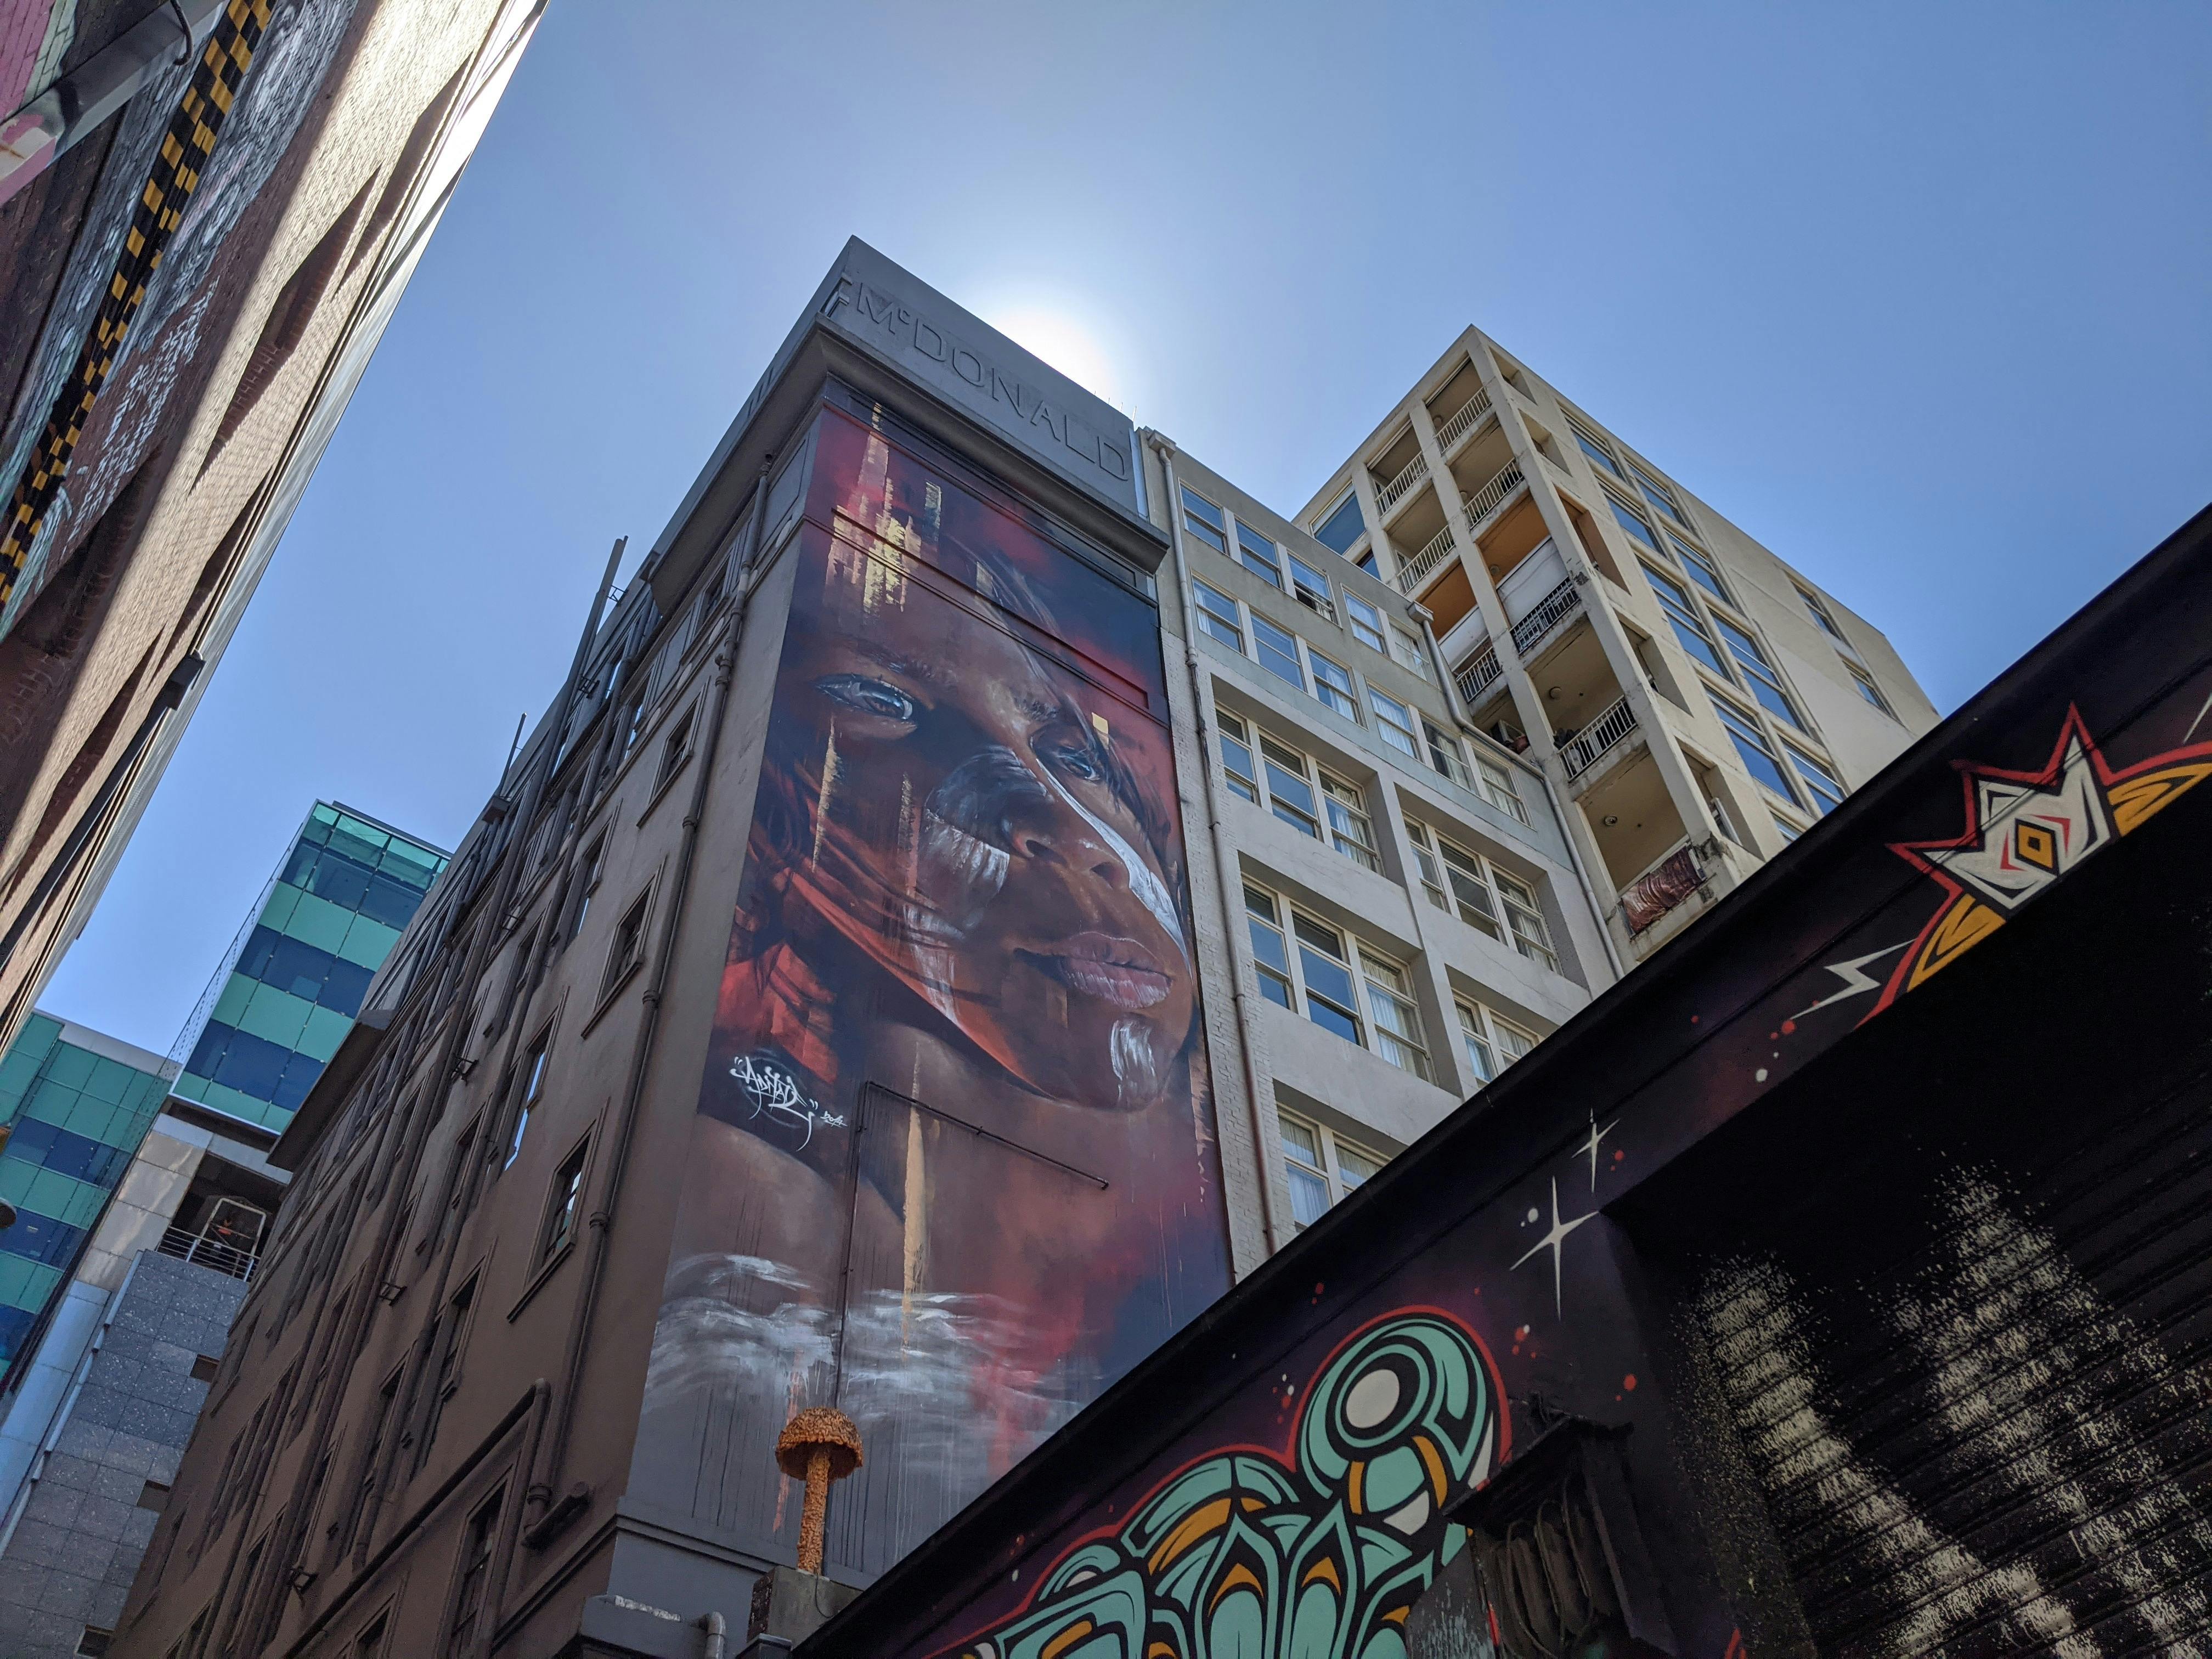 Melbourne street art exploration game and tour Musement